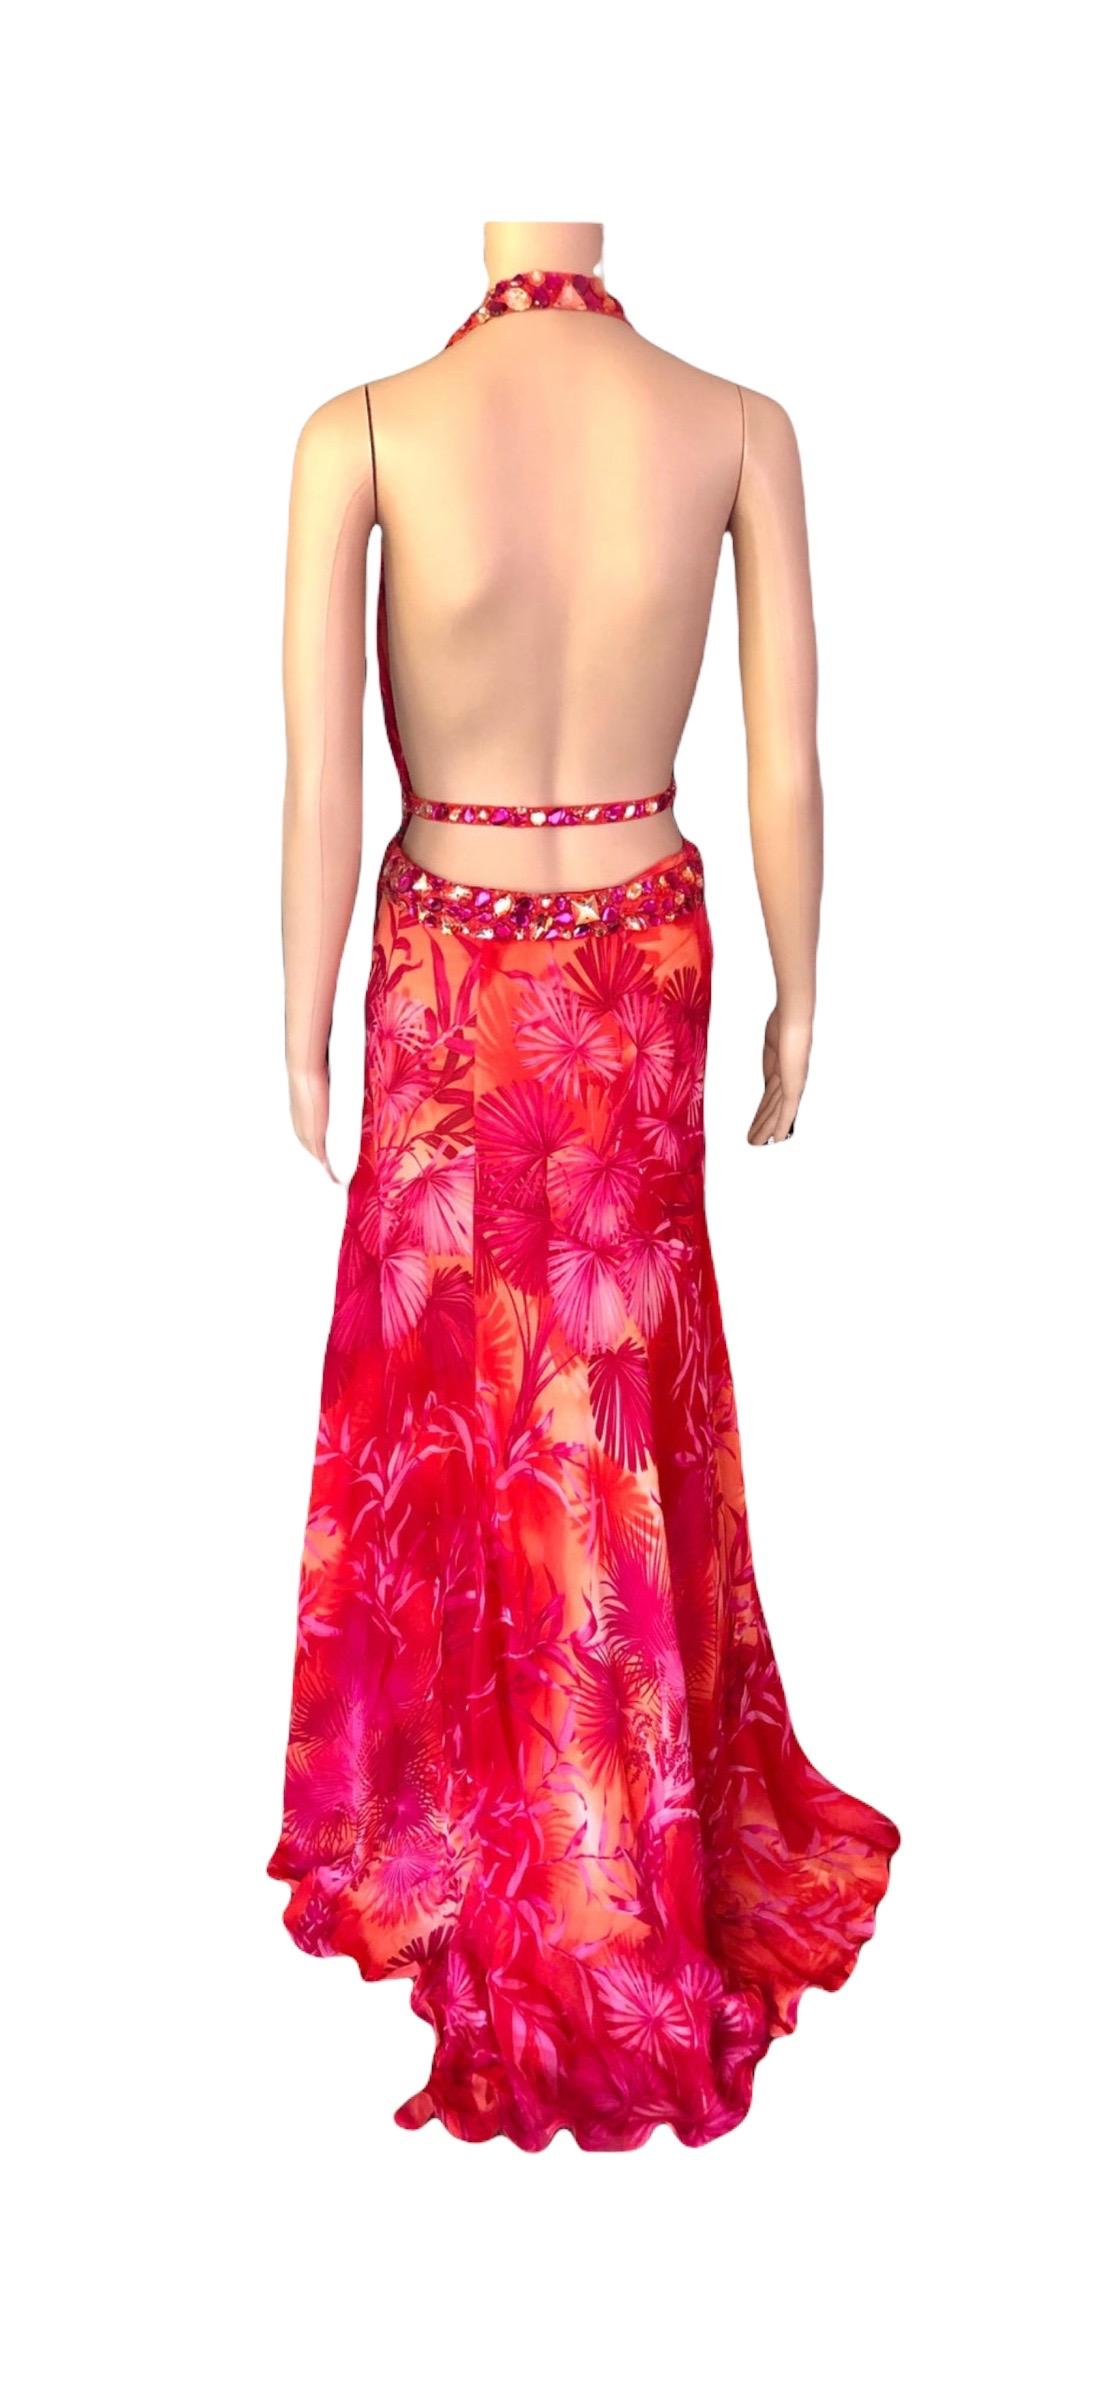 Women's or Men's Gianni Versace S/S 2000 Runway Embellished Jungle Print Evening Dress Gown